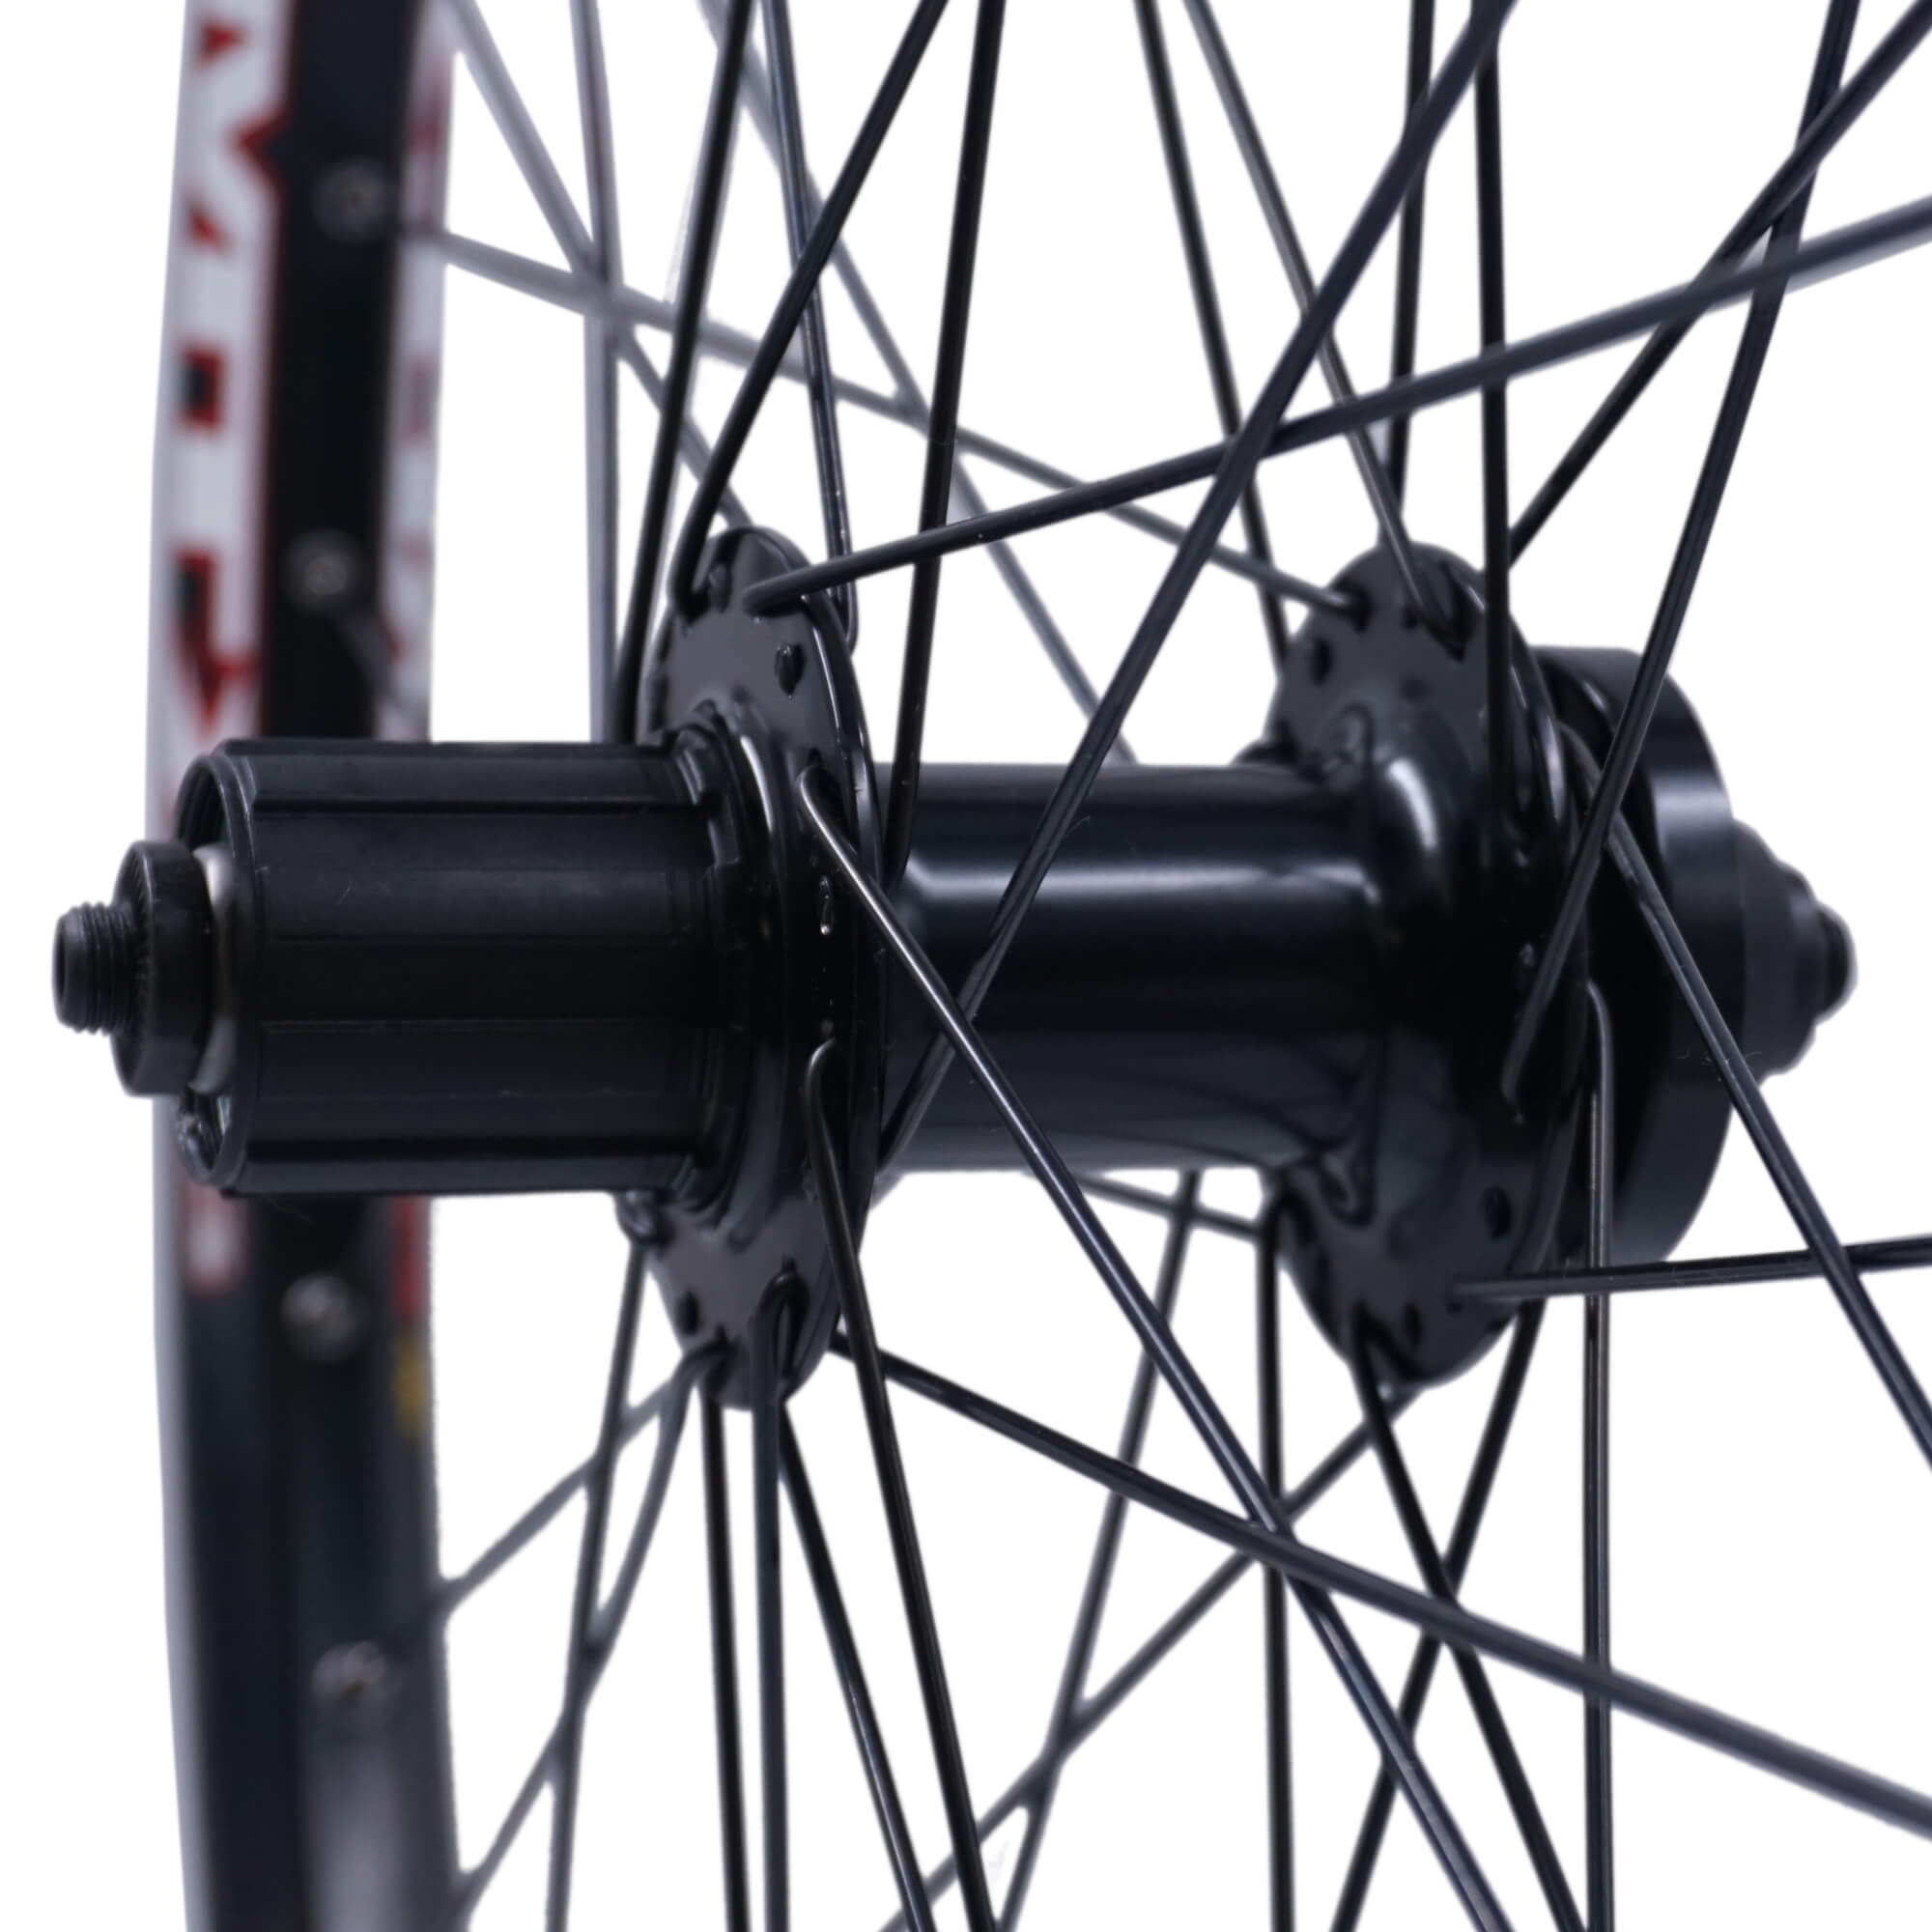 Sun Ringle MTX33 26" Black Alloy Front and Rear Bike Disc MTB Wheelset